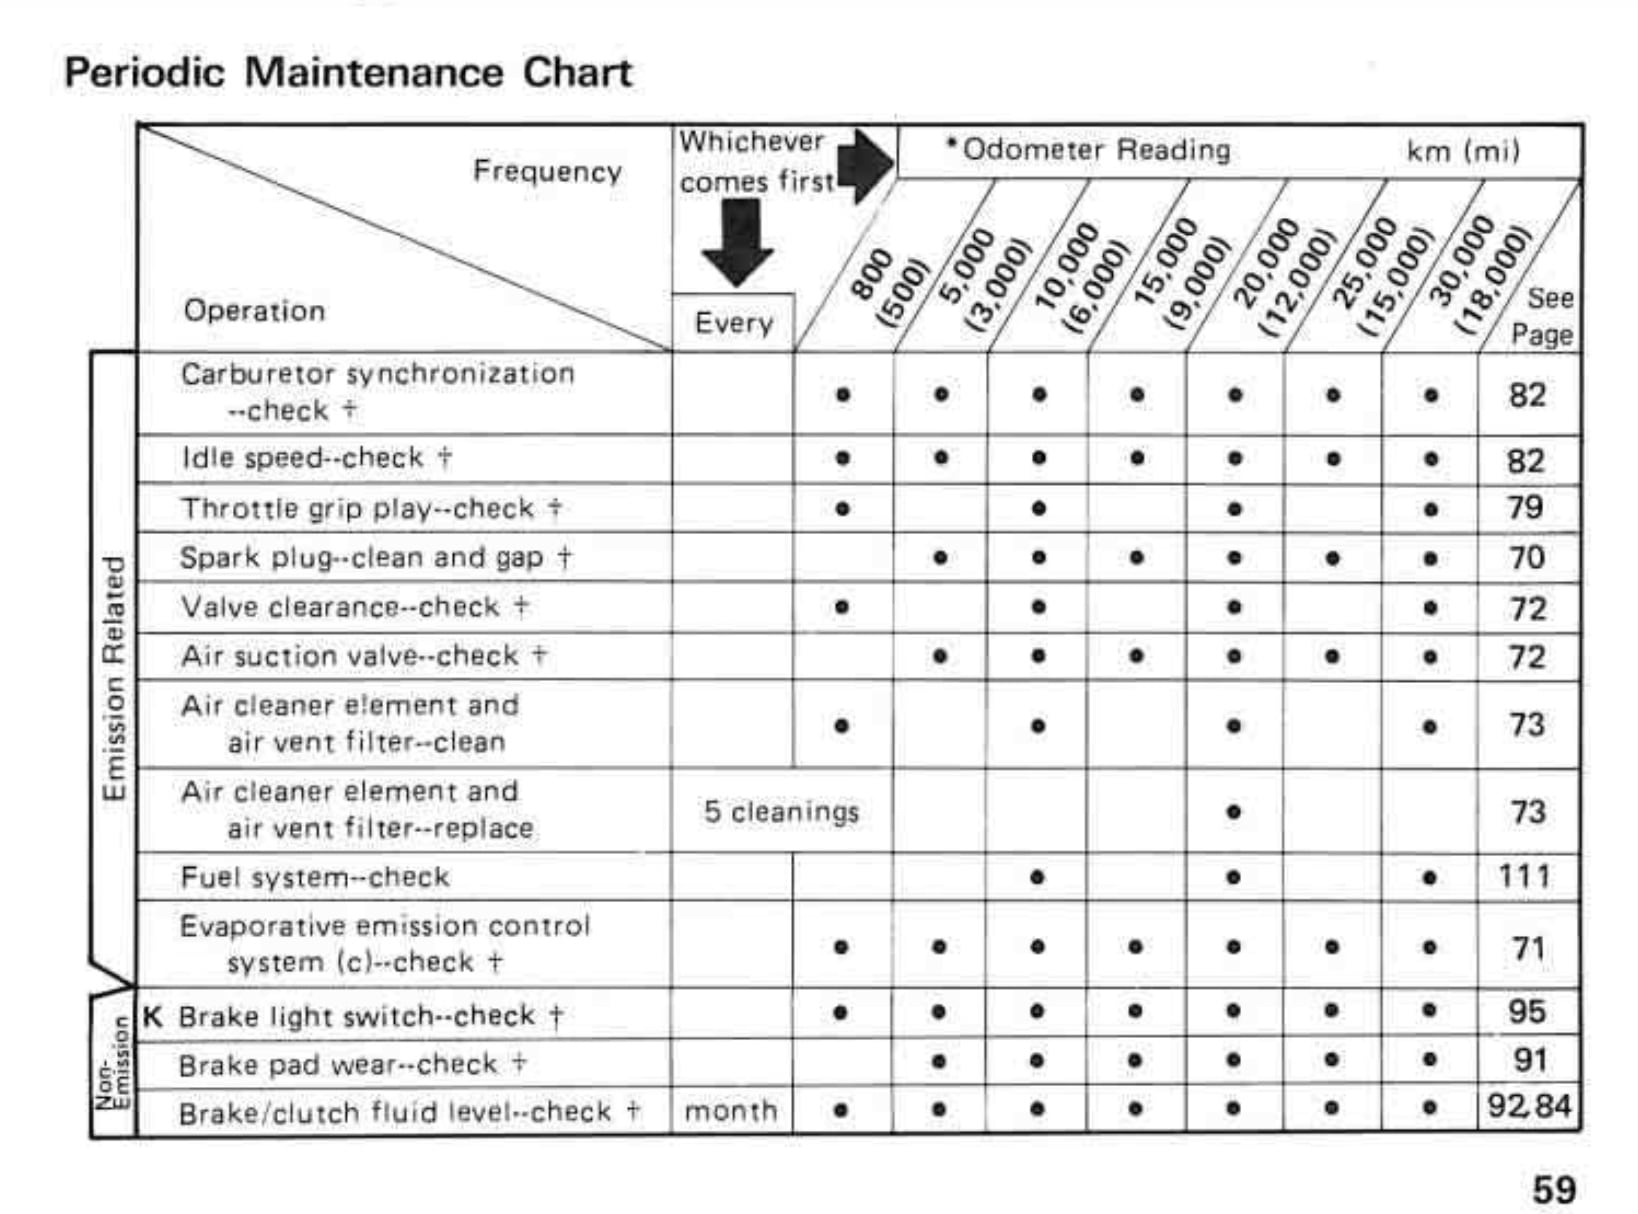 1996 Kawasaki ZX-9R maintenance schedule screenshot from manual 1